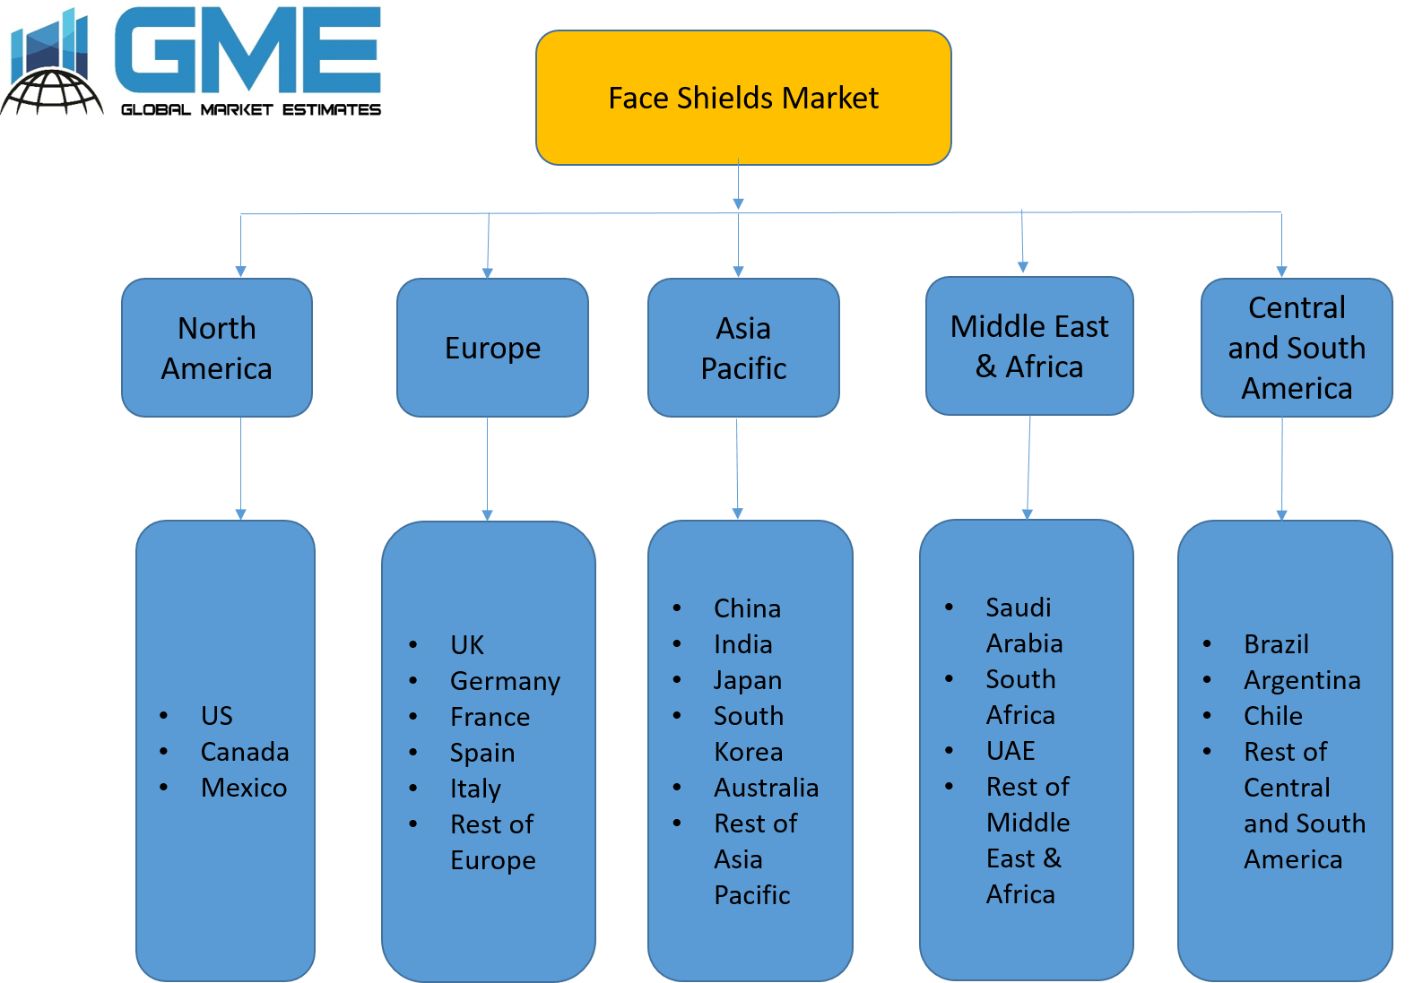 Face Shields Market - Regional Analysis